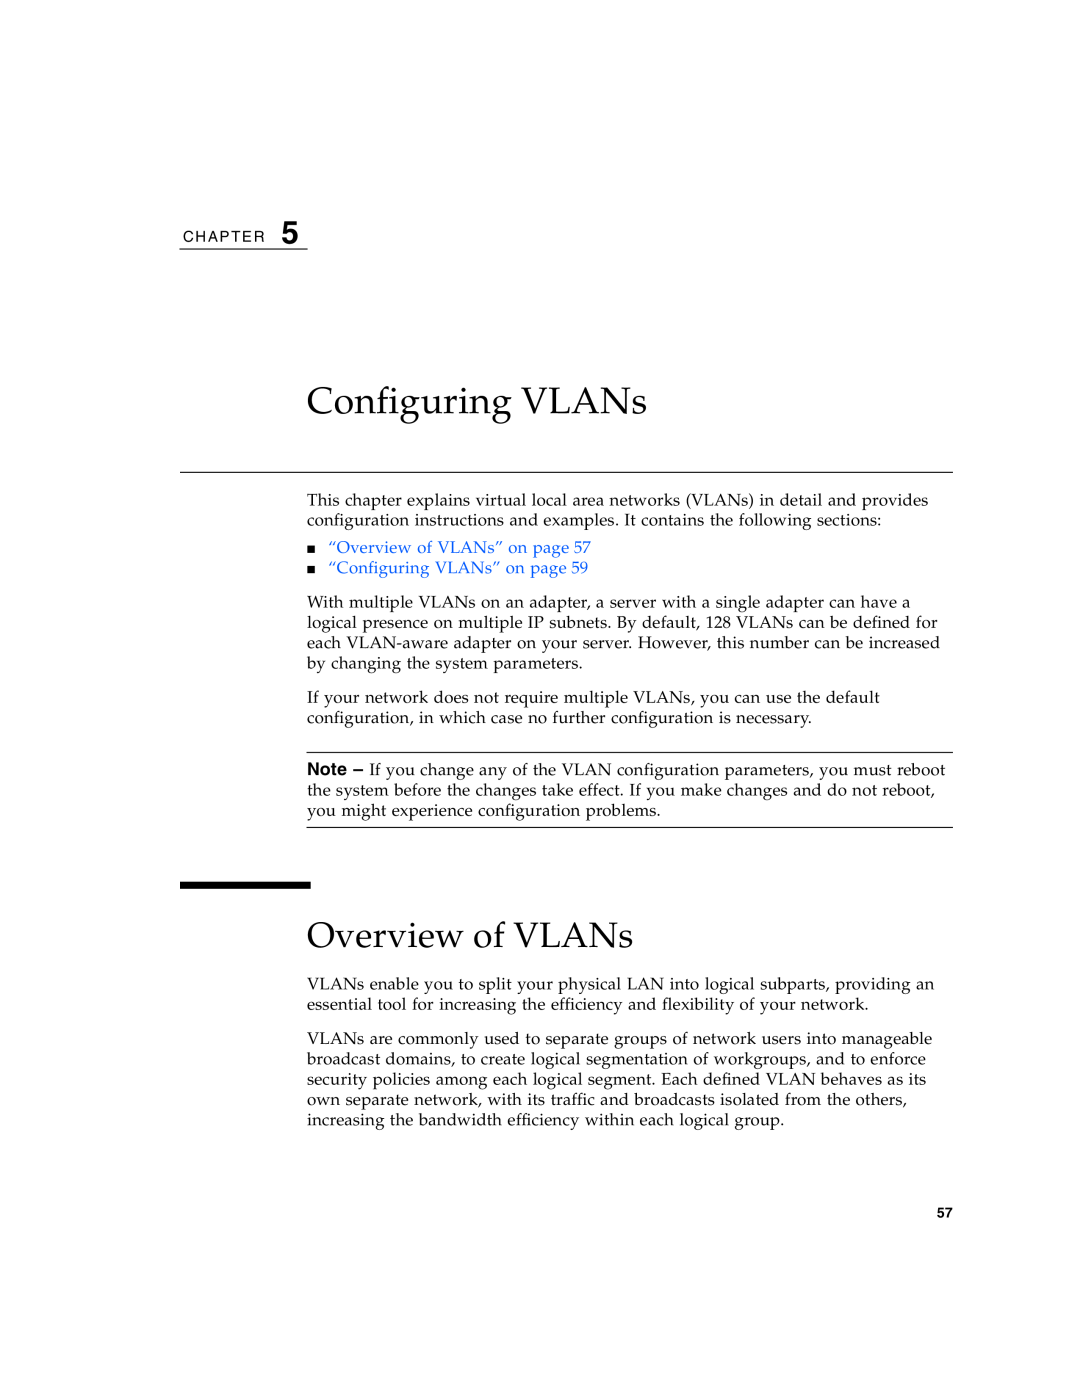 Sun Microsystems Gigabit Ethernet MMF/UTP Adapter manual Configuring VLANs, Overview of VLANs 